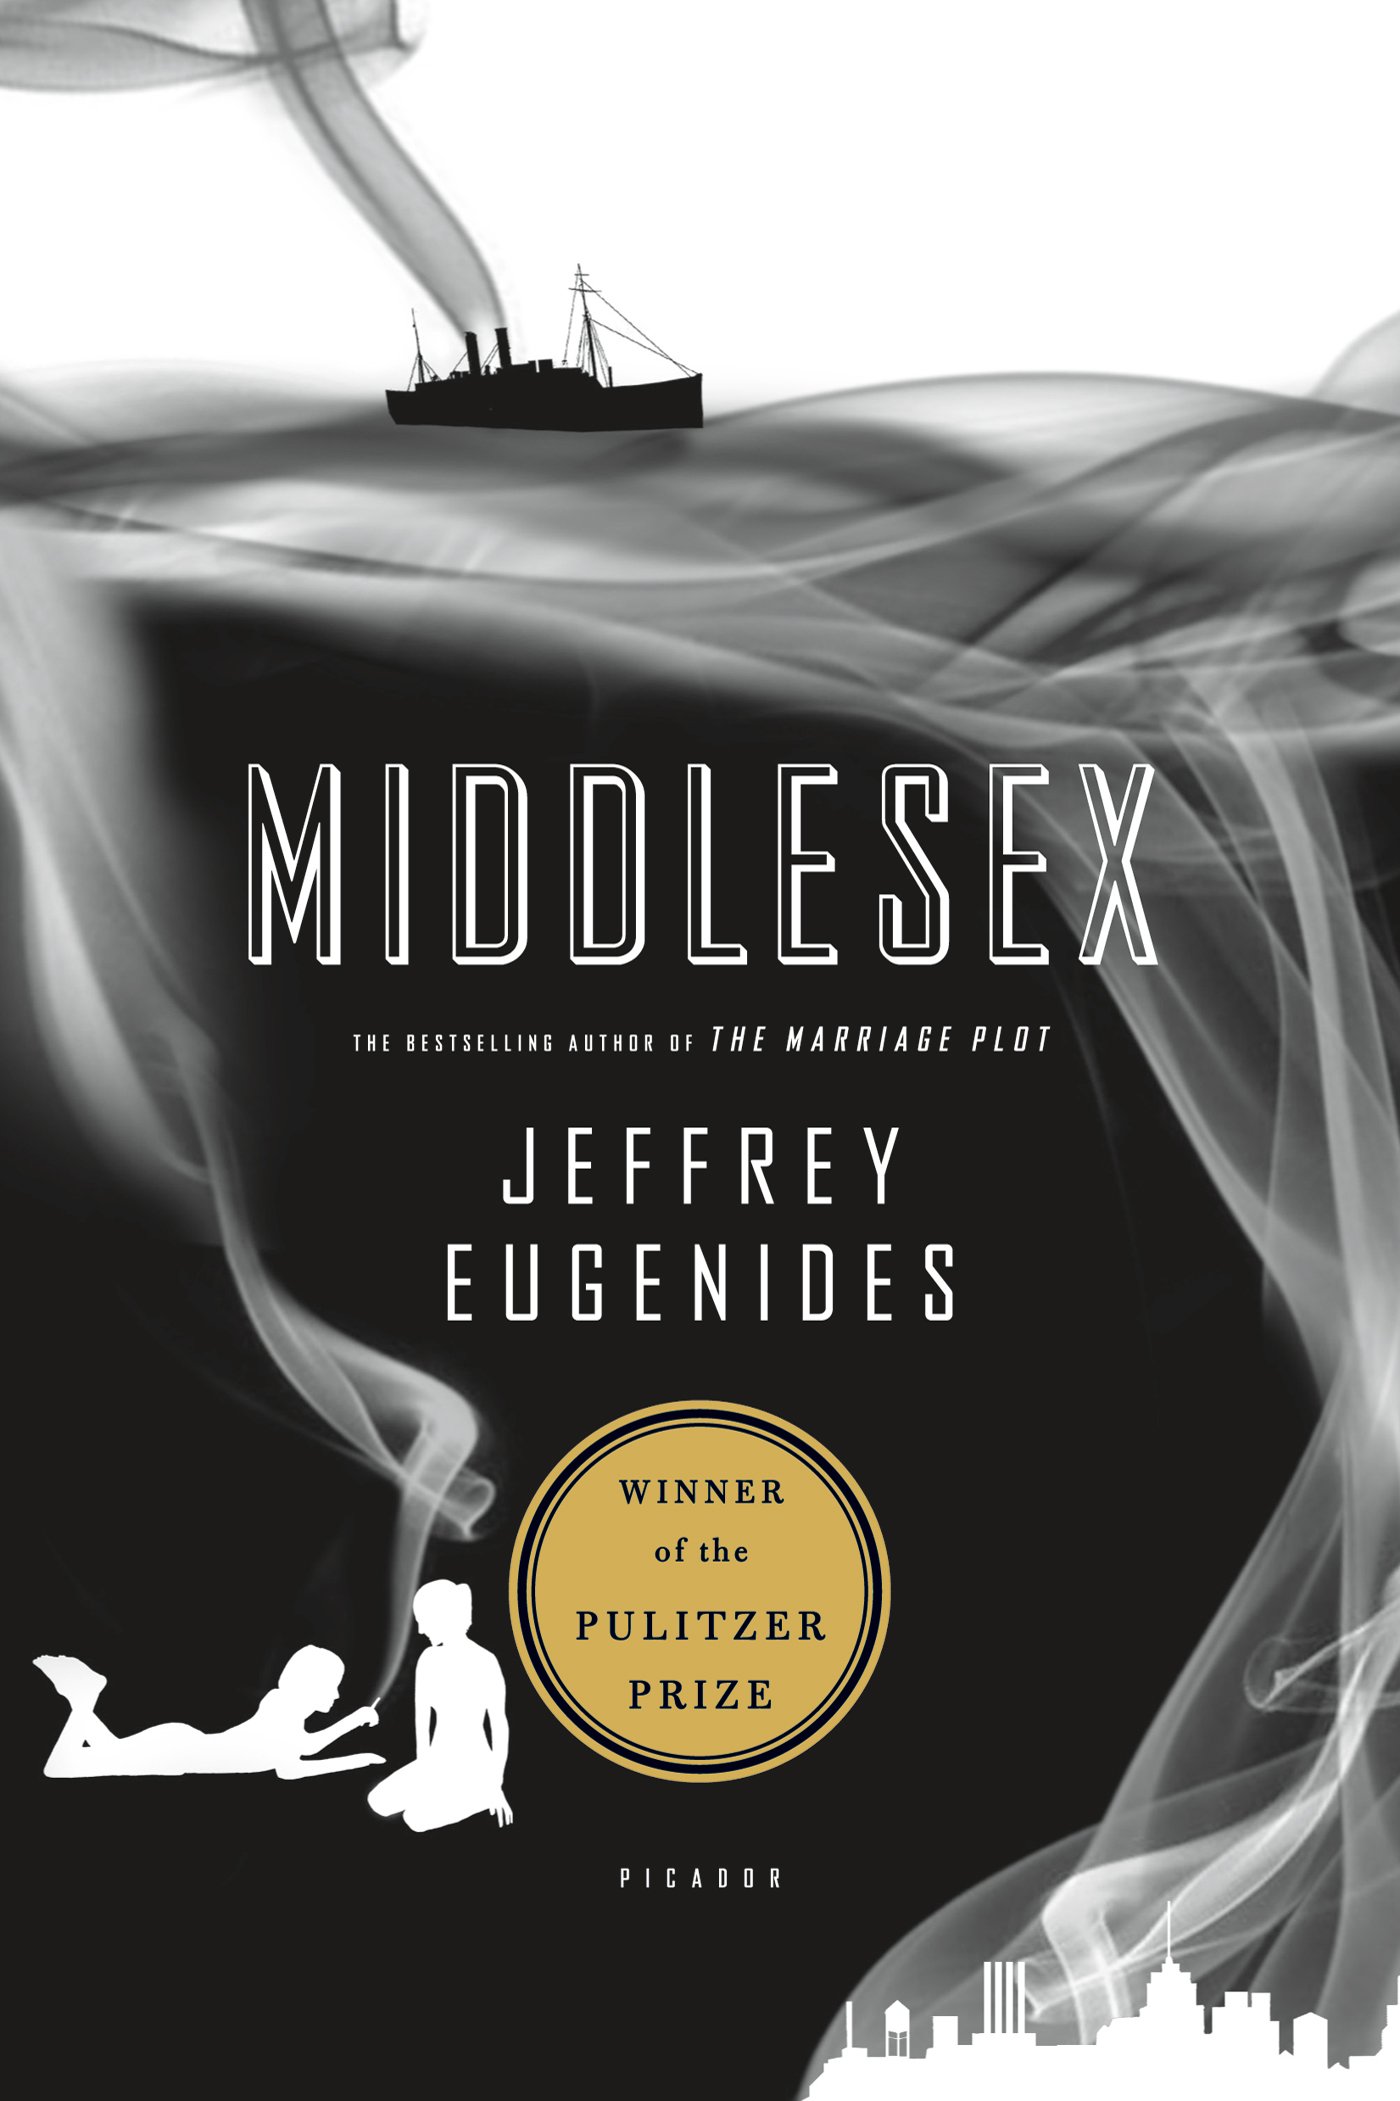 middlesex jeffrey eugenides tertulia literaria club libro novela madrid ciervo blanco